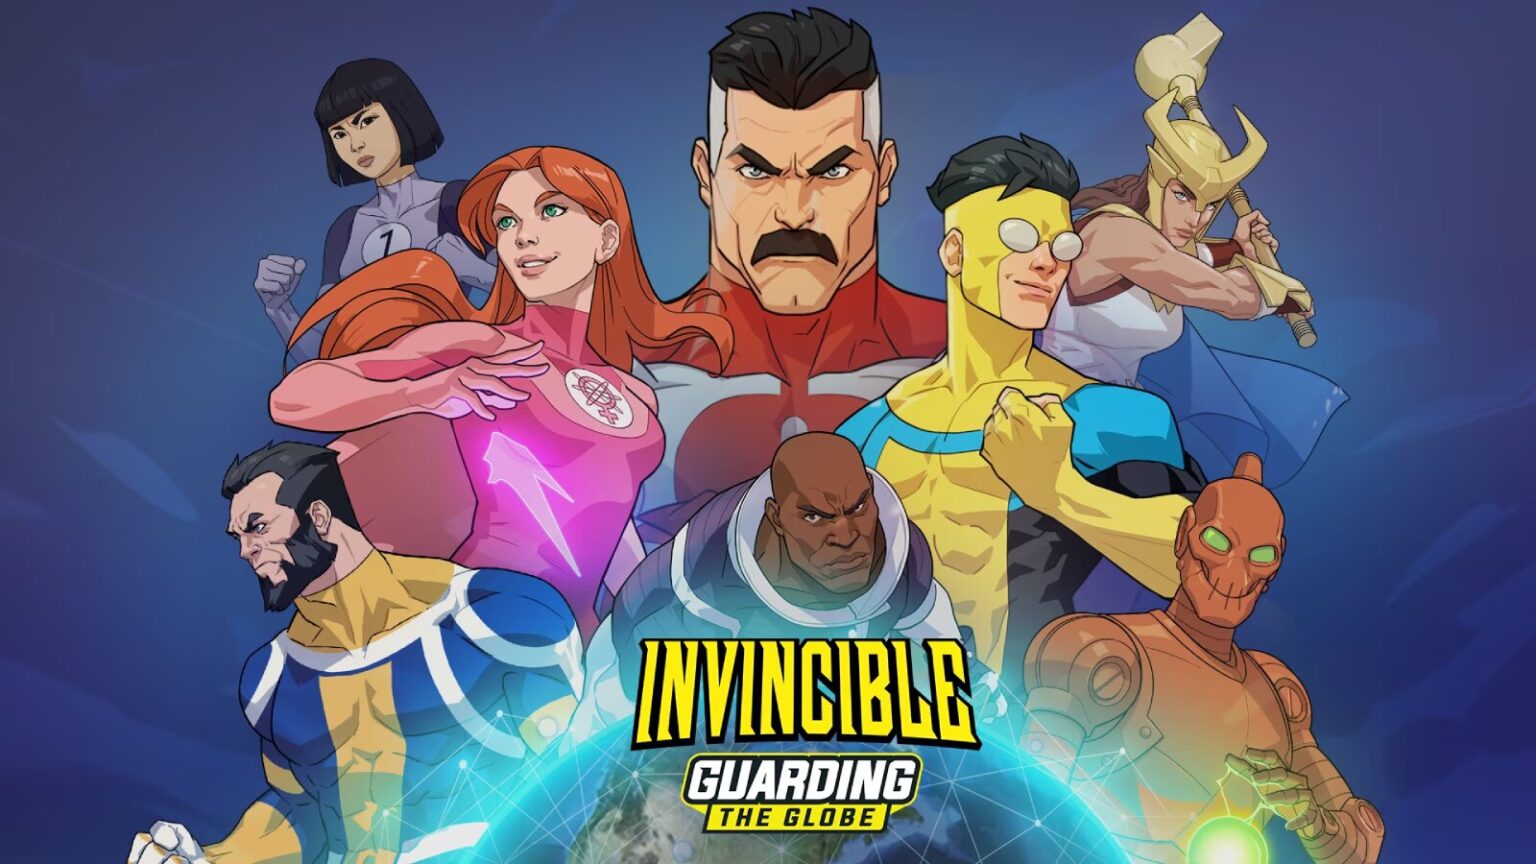 Invincible: Guarding the Globe Release showcases superhero team